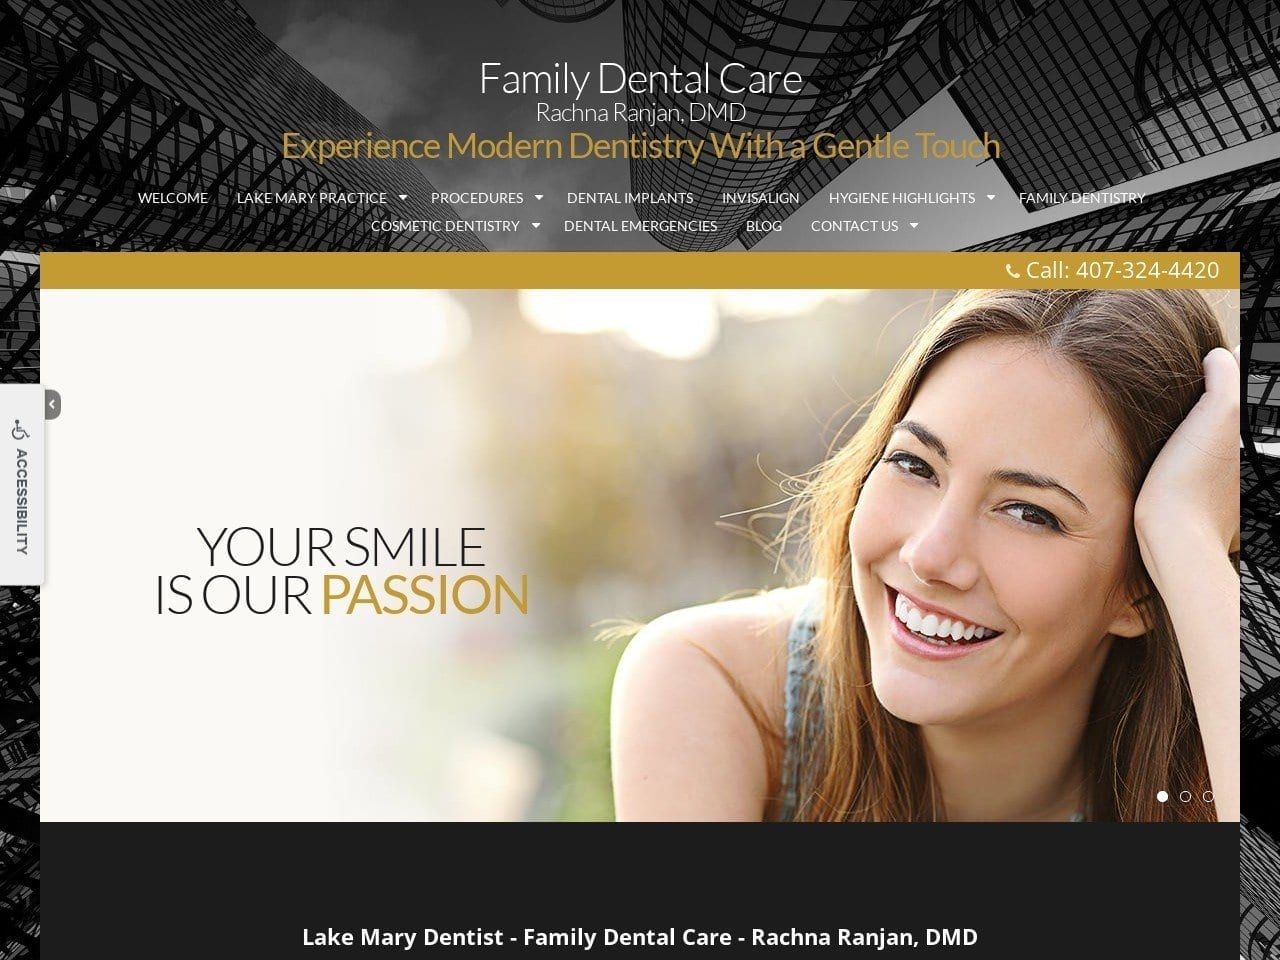 Family Dental Care Website Screenshot from familydentalcarefl.com